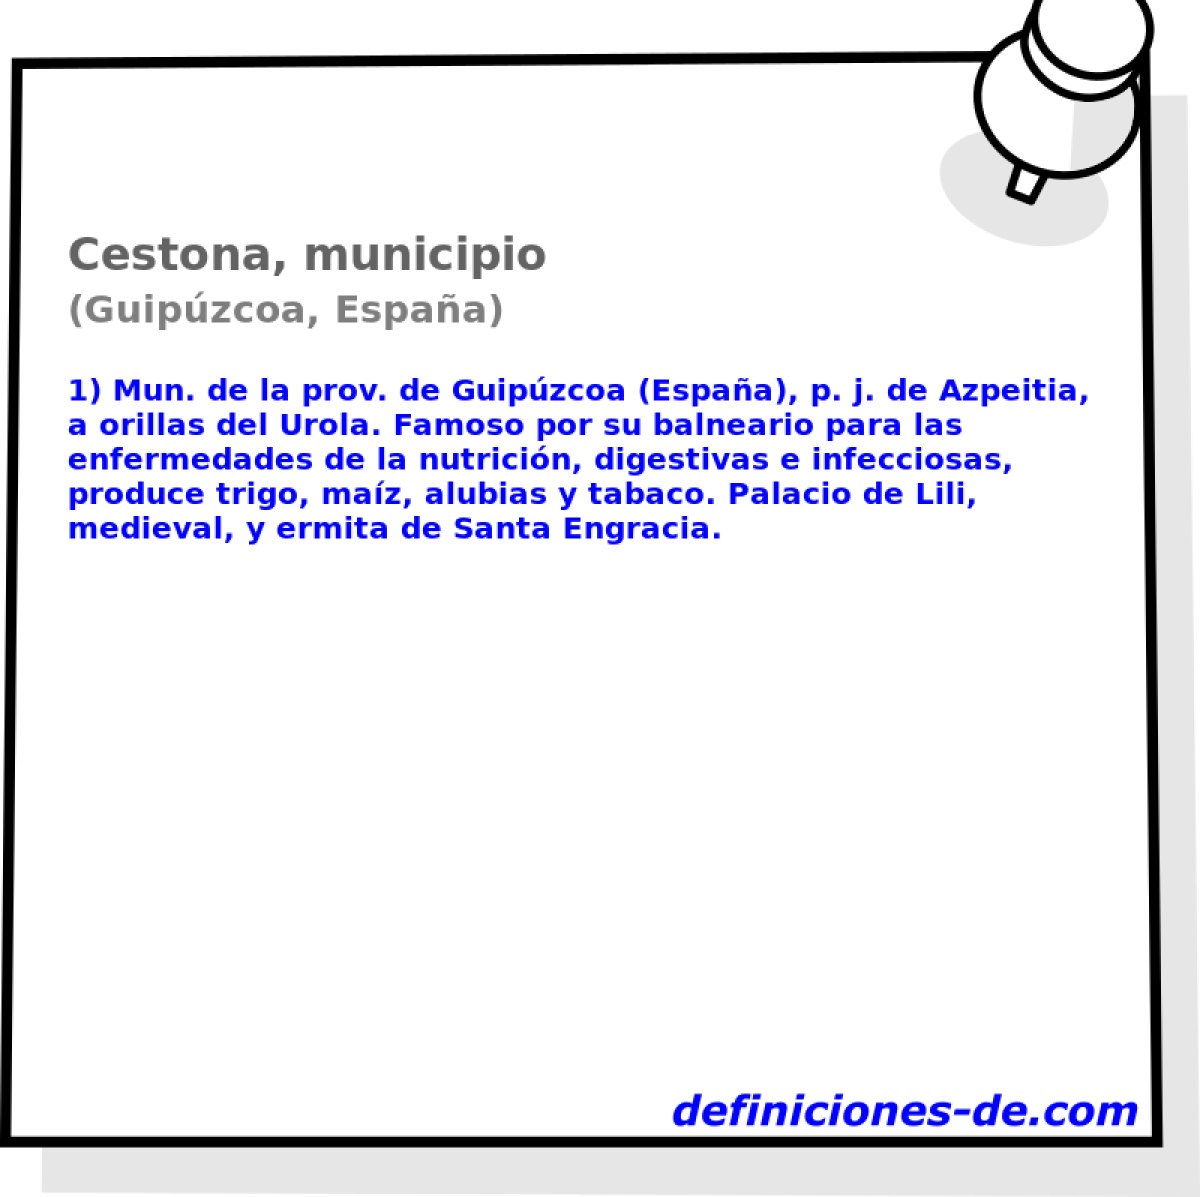 Cestona, municipio (Guipzcoa, Espaa)